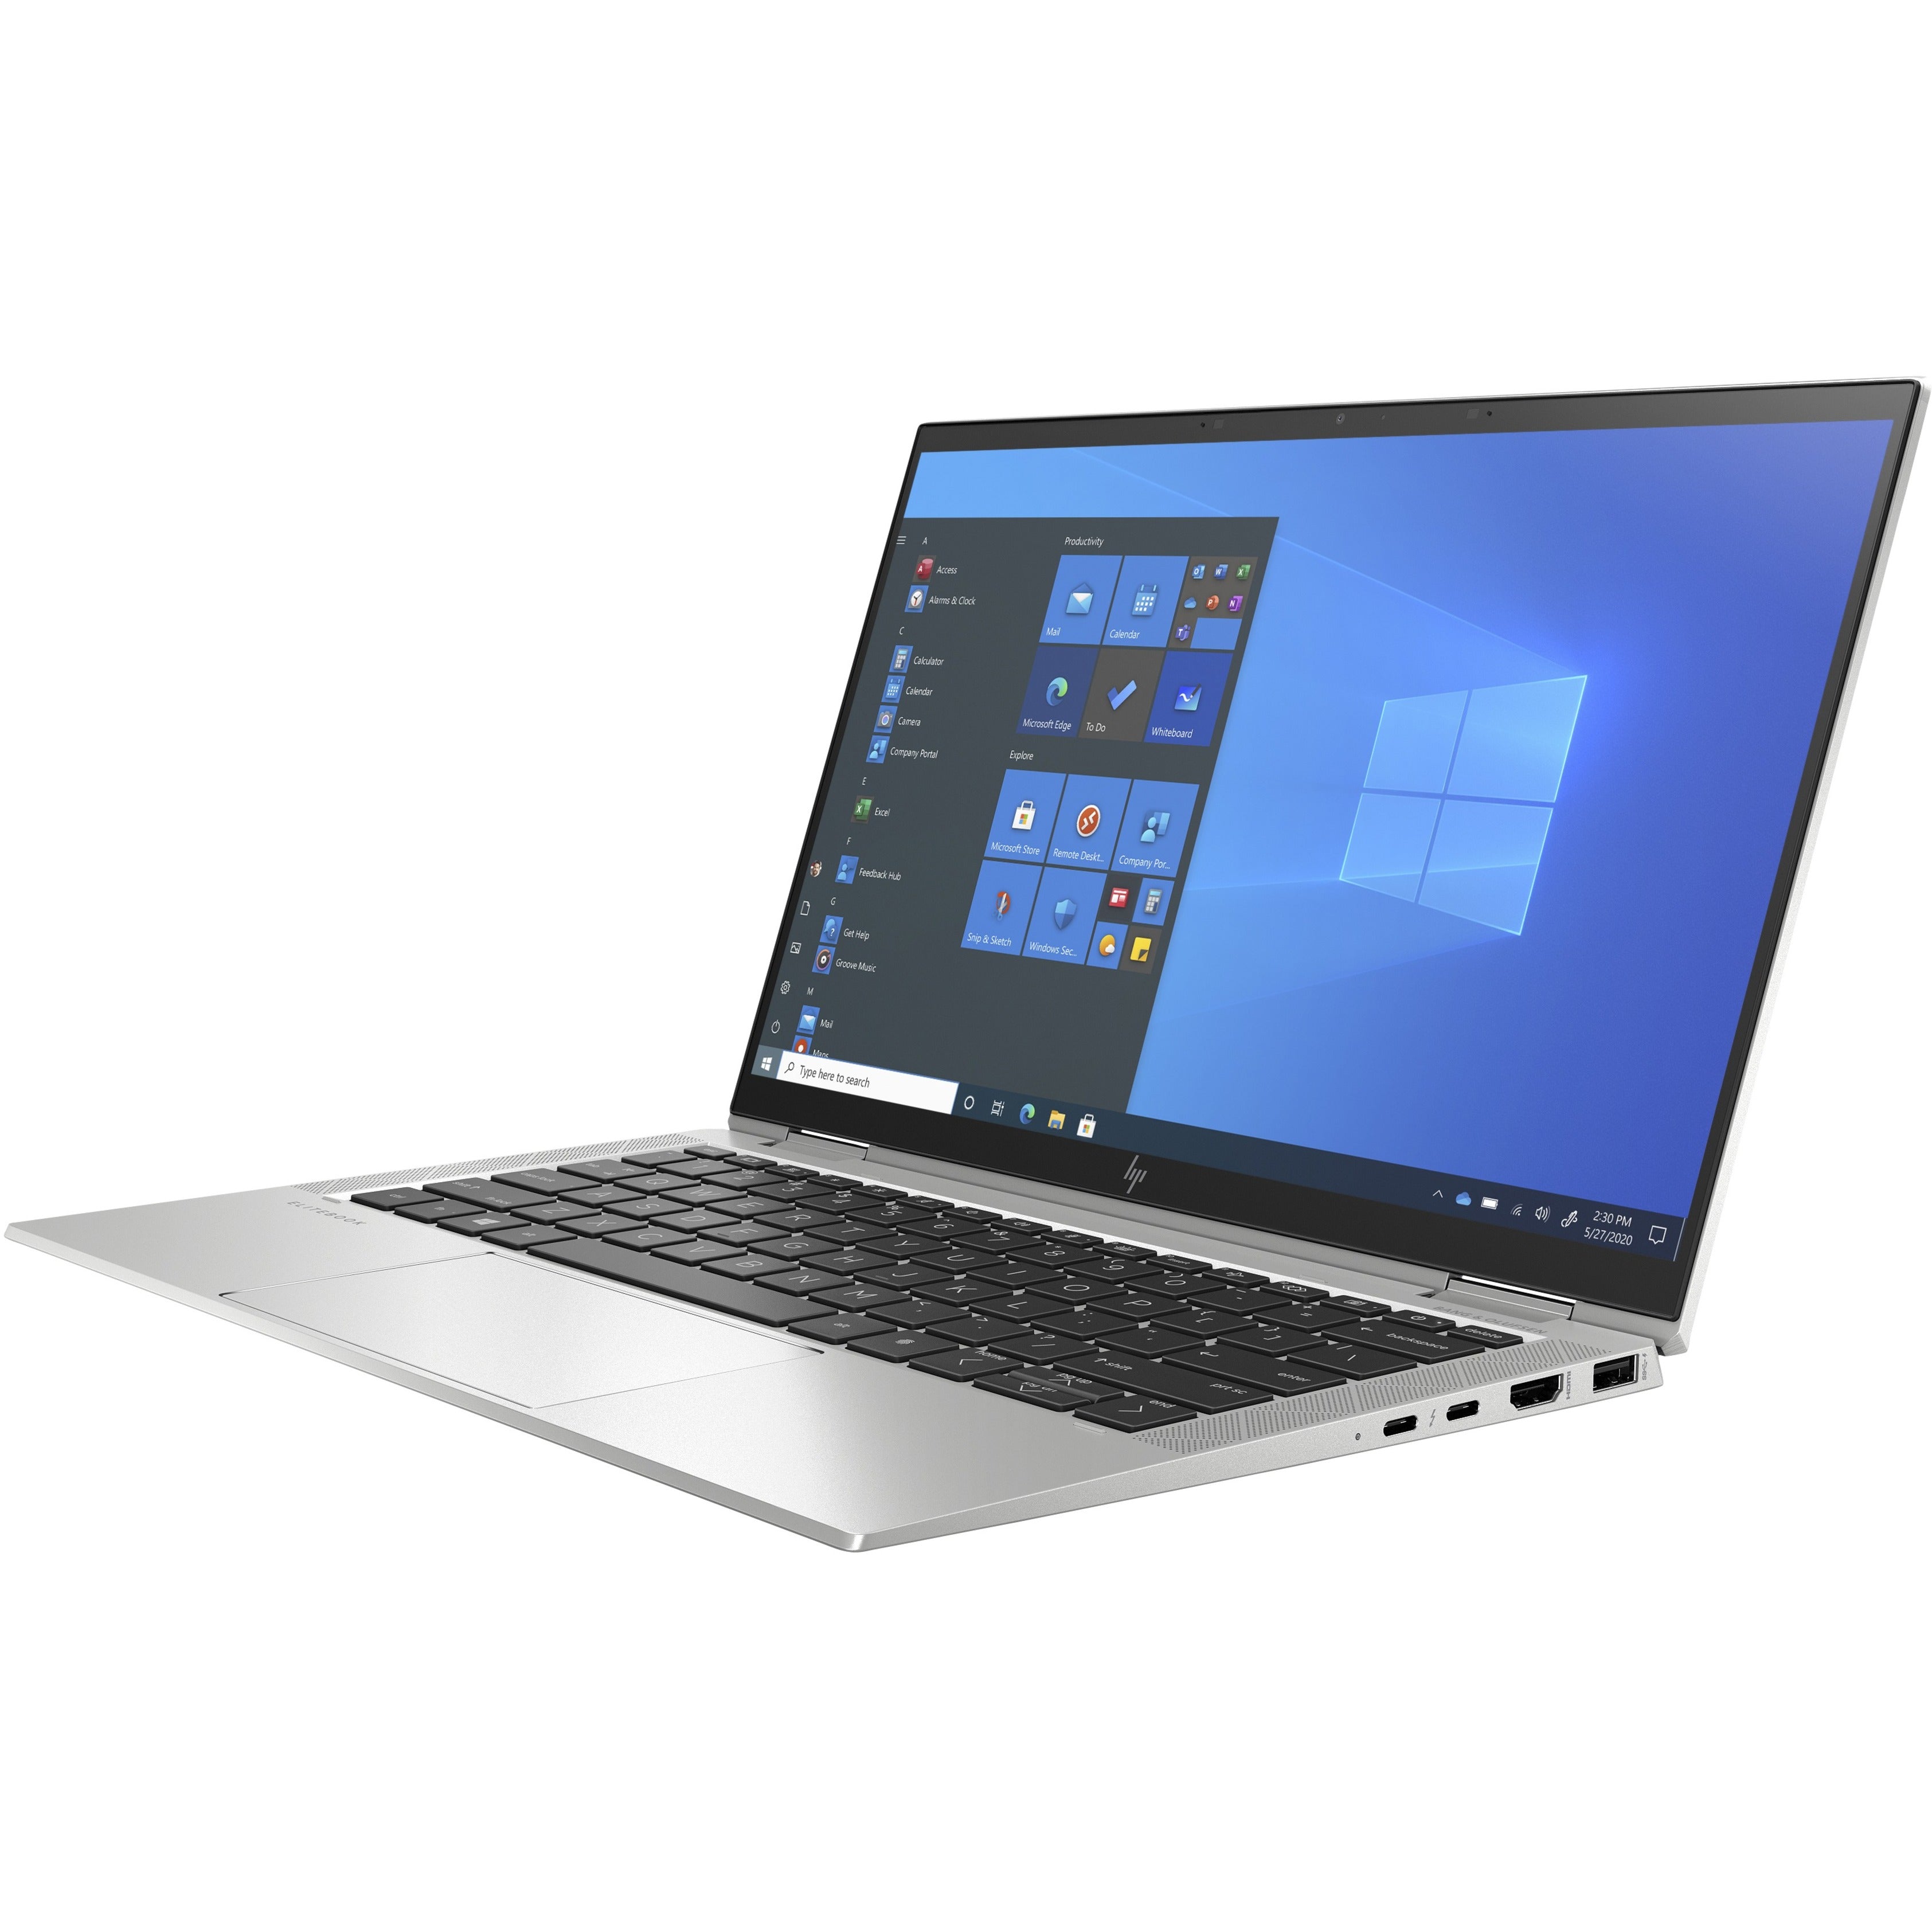 HP EliteBook x360 1030 G8 2 in 1 Notebook, Intel i7-1185G7, 13.3 FHD Touchscreen, 16GB RAM, 256GB SSD, Windows 11 Pro64 DG106, 3yr Warranty